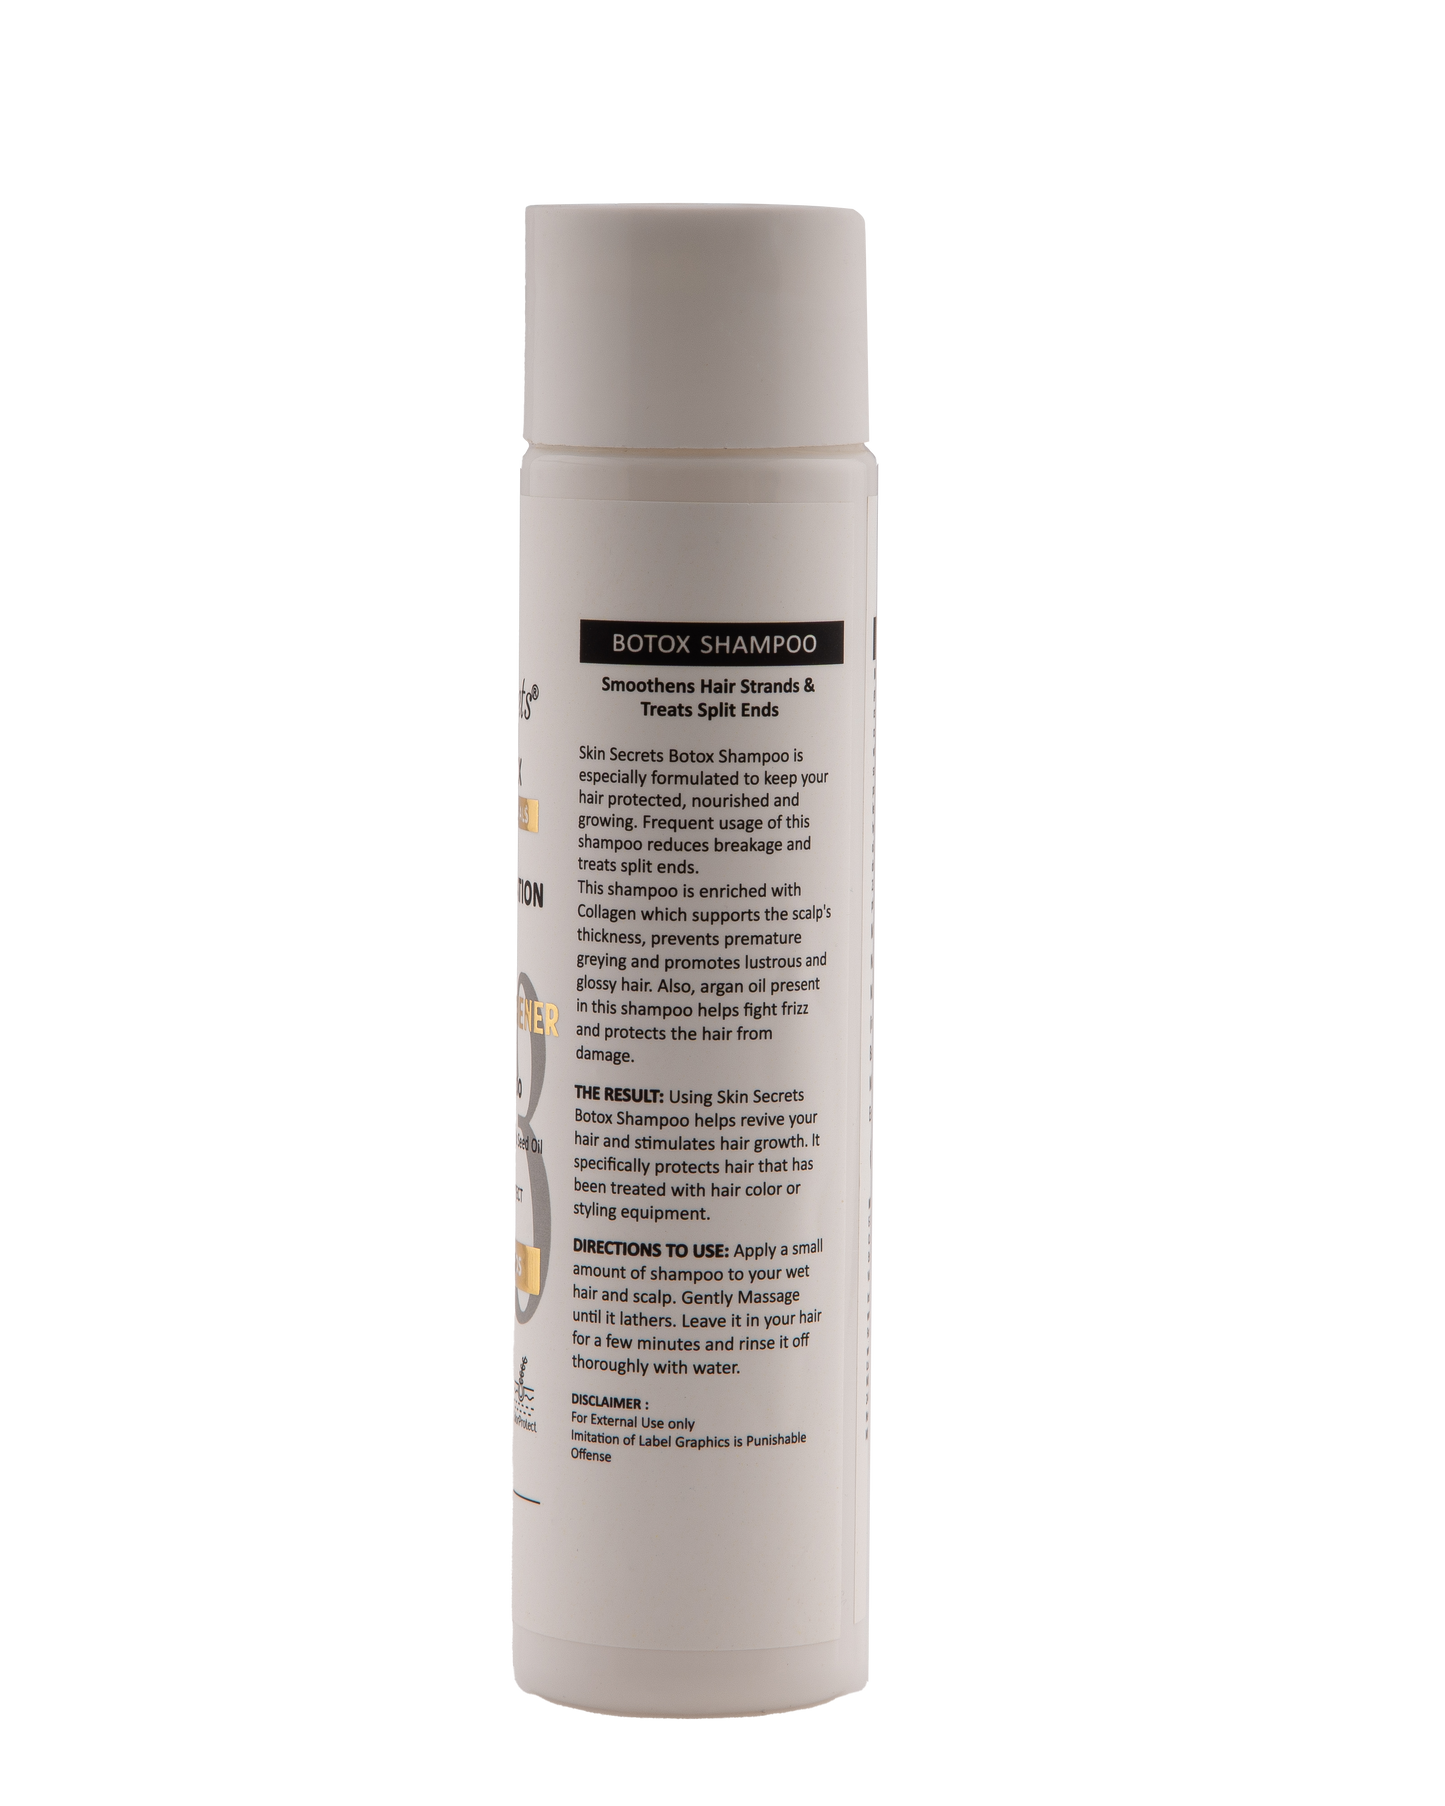 Skin Secrets Bond Strenghtener Botox Shampoo with Argan oil, Collagen & Black seed oil| Paraben & Sulphate Free (250 ml)